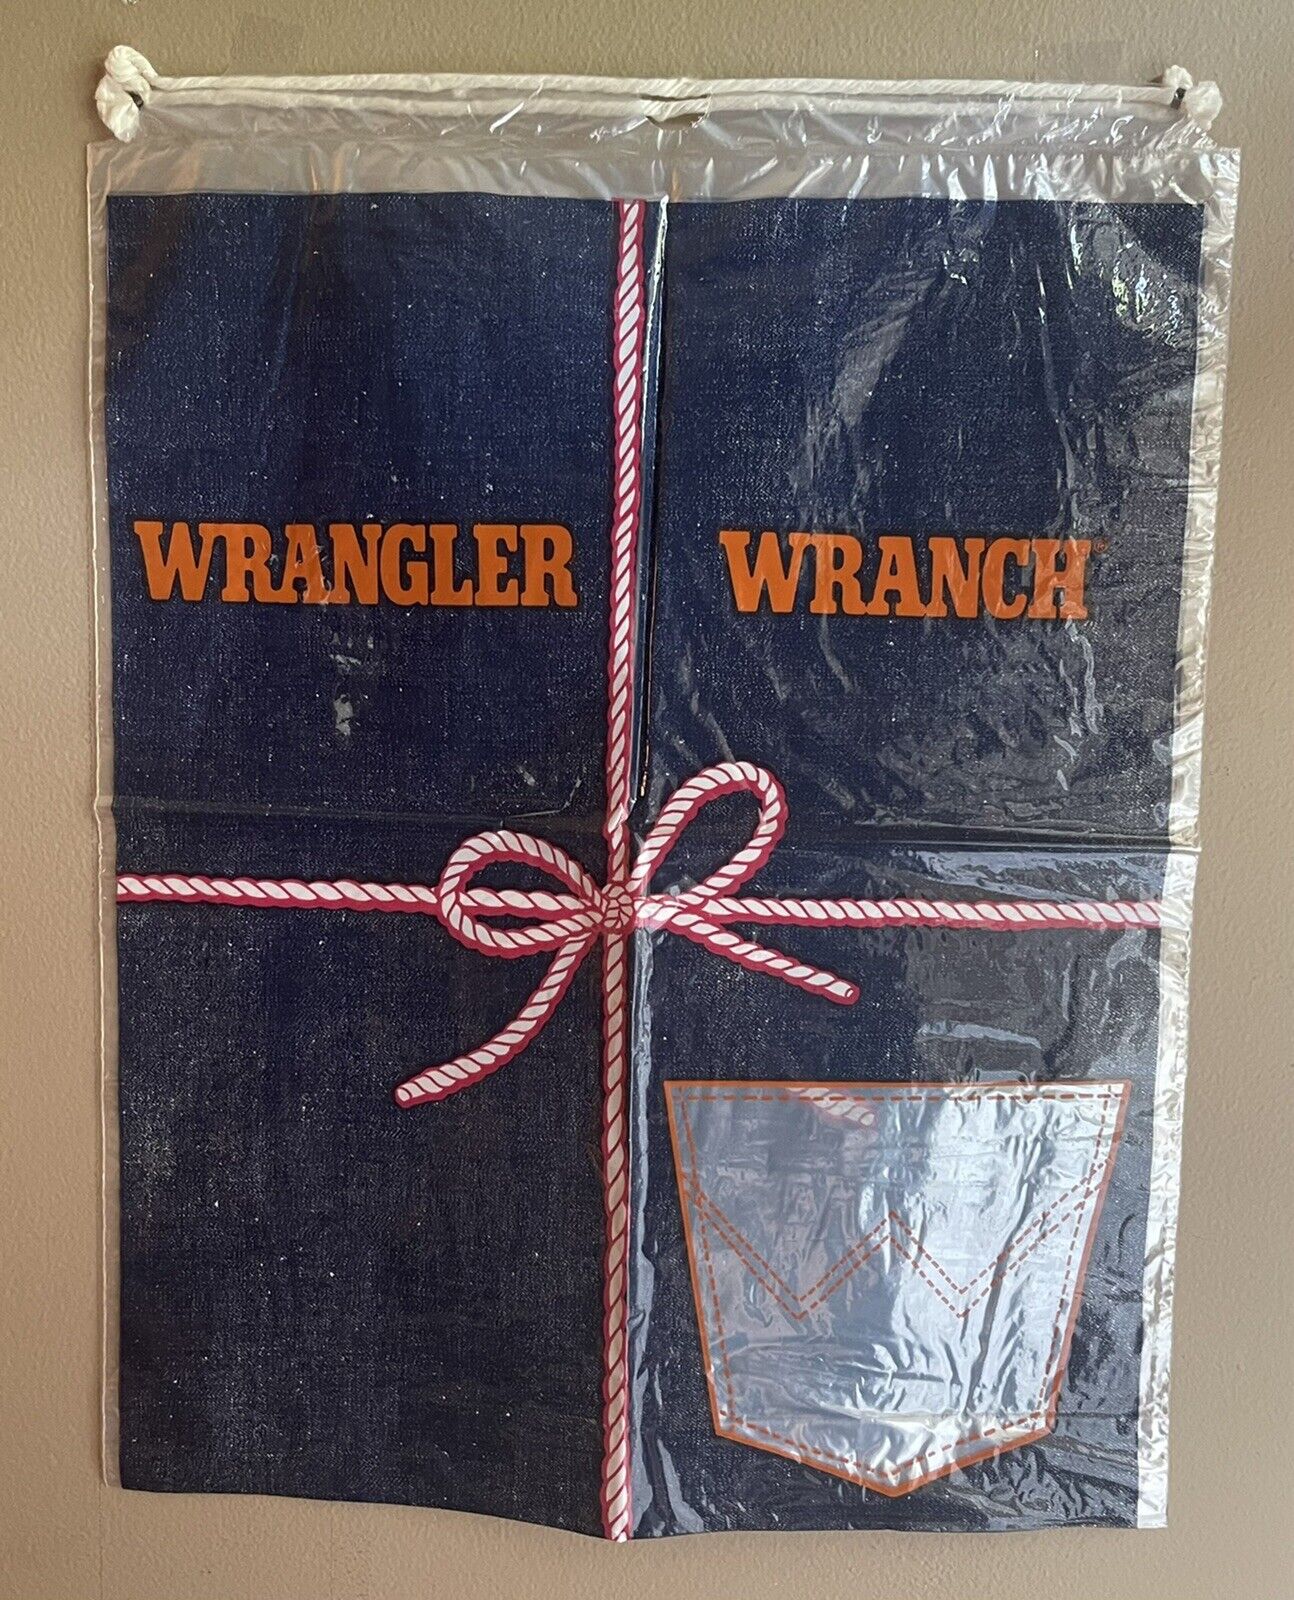 Vintage 70s Wrangler Wranch Plastic Shopping Store Bag Drawstring Denim Jean